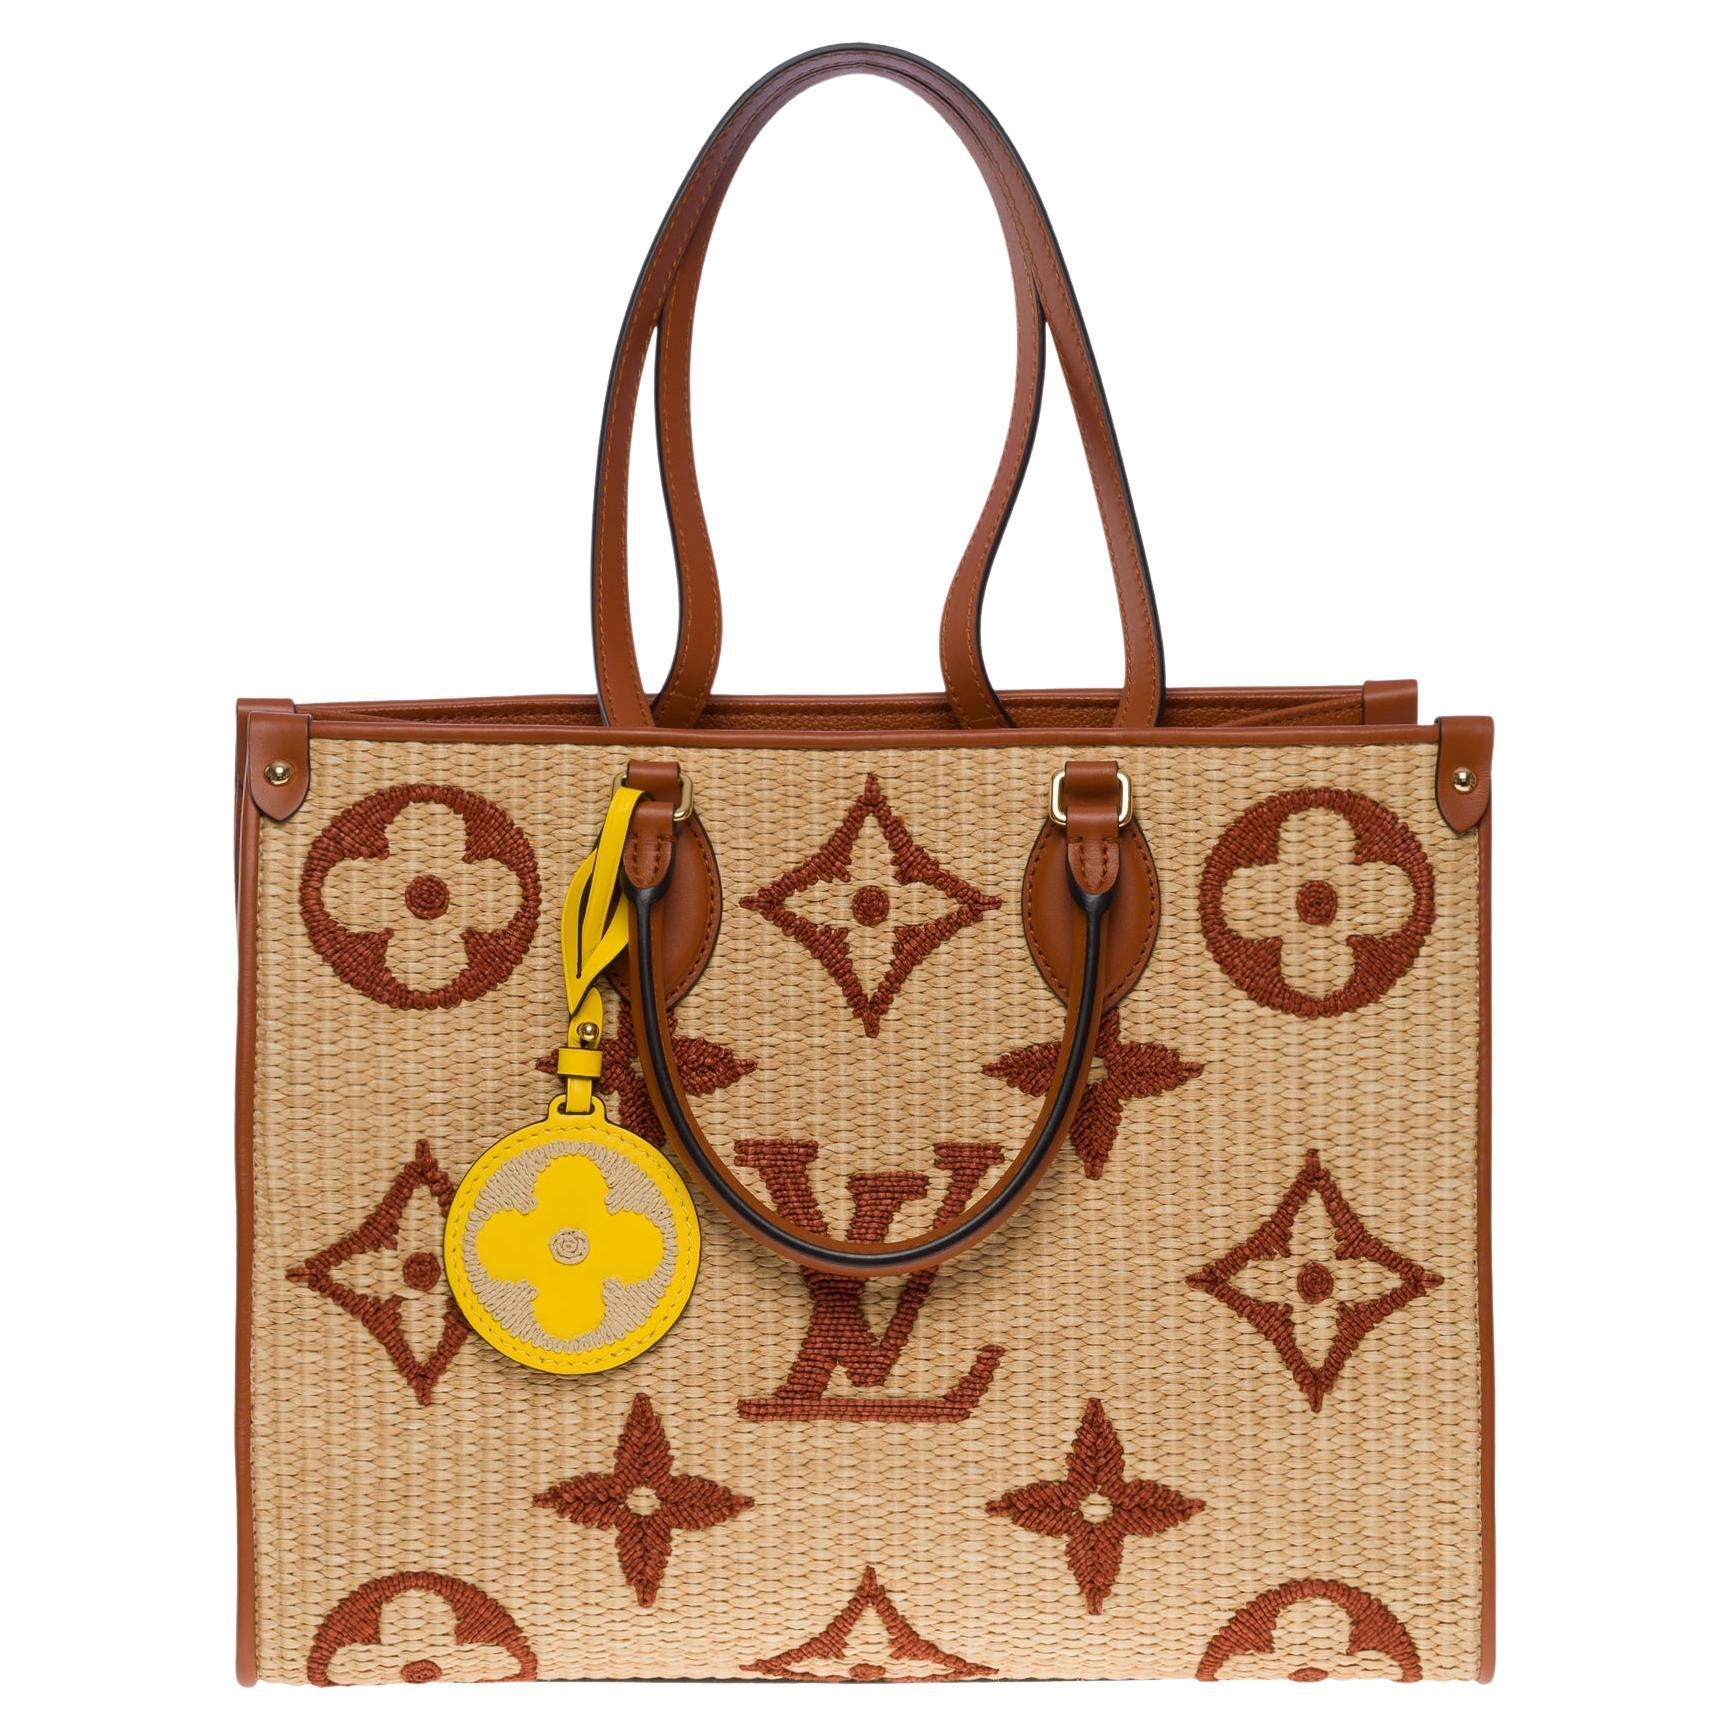 Louis Vuitton Monogram Woven Leather Top Handle Hobo Bag Brown